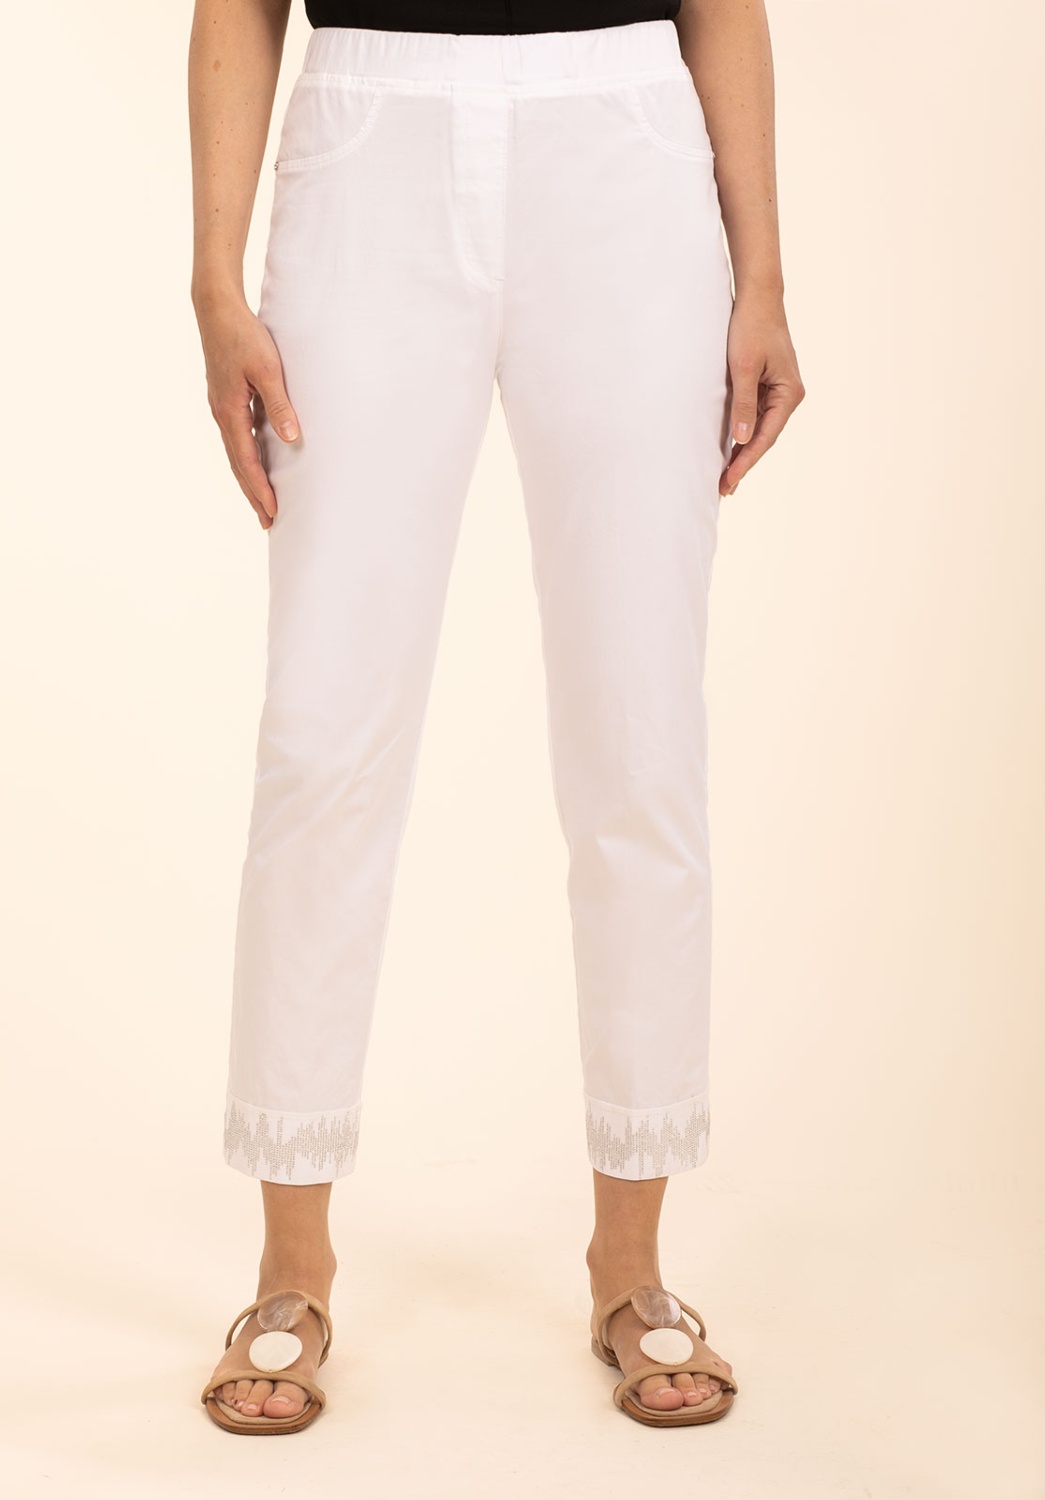 White Denim Jeans 1